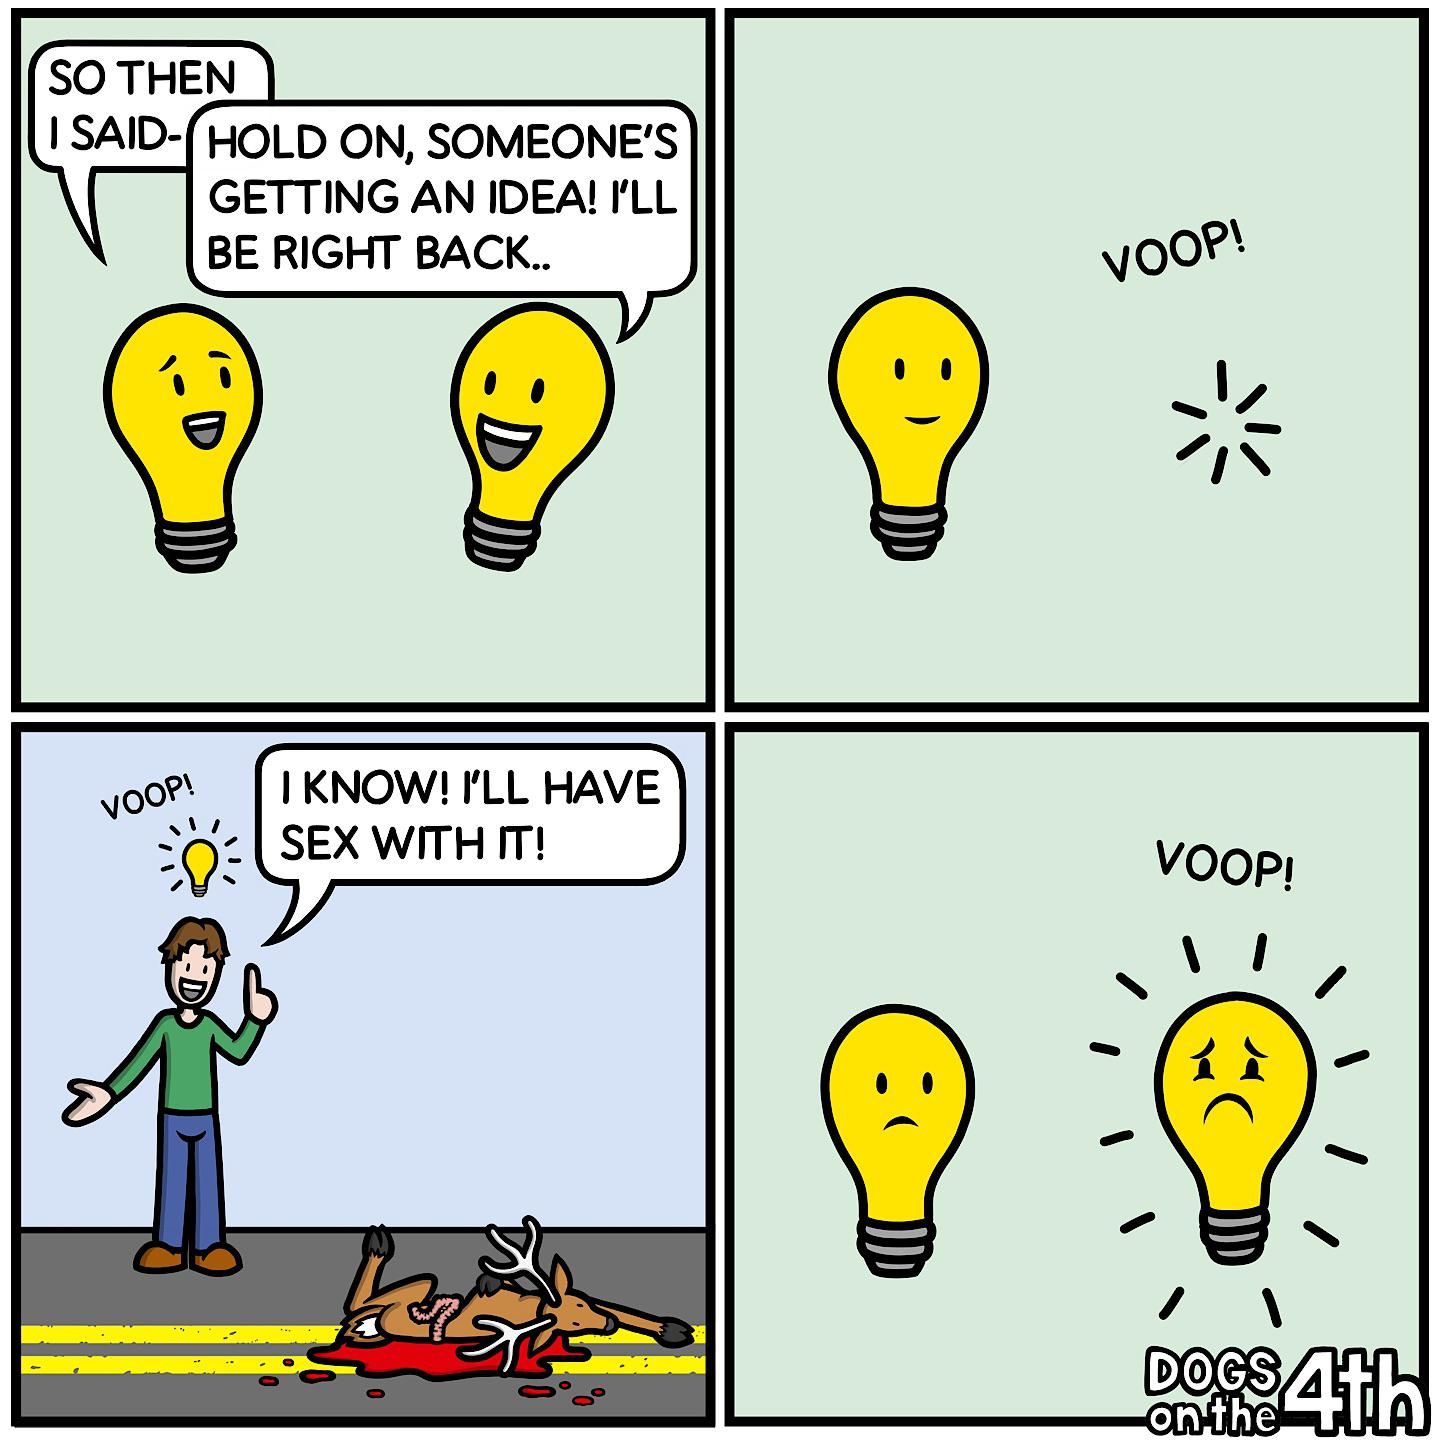 Lightbulb: Changed